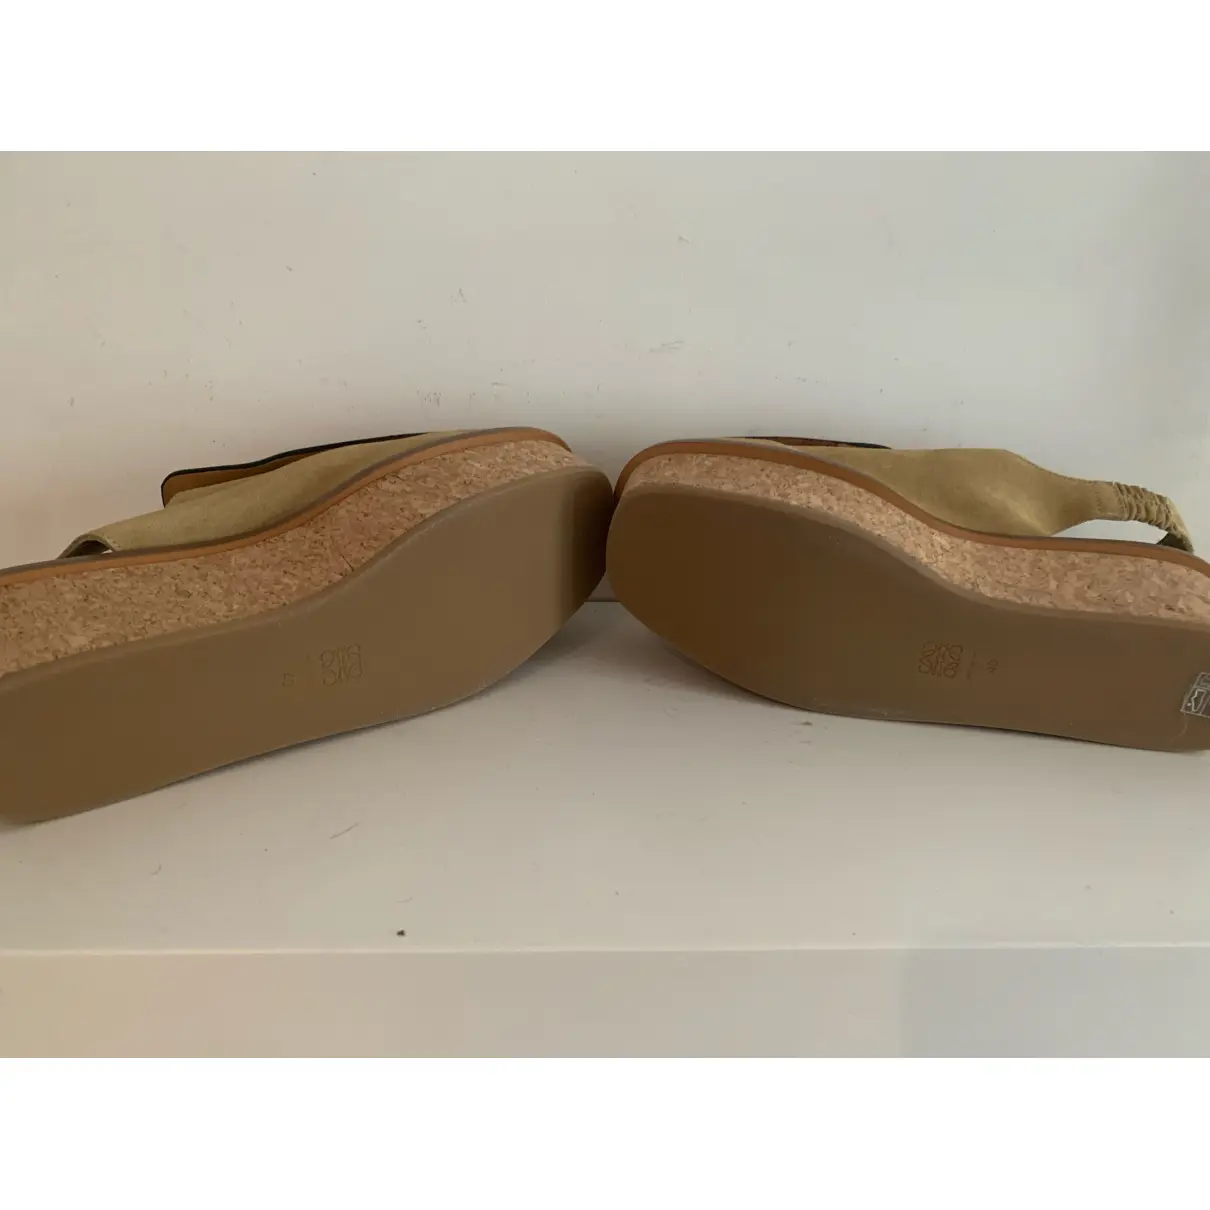 Leather sandals Loewe